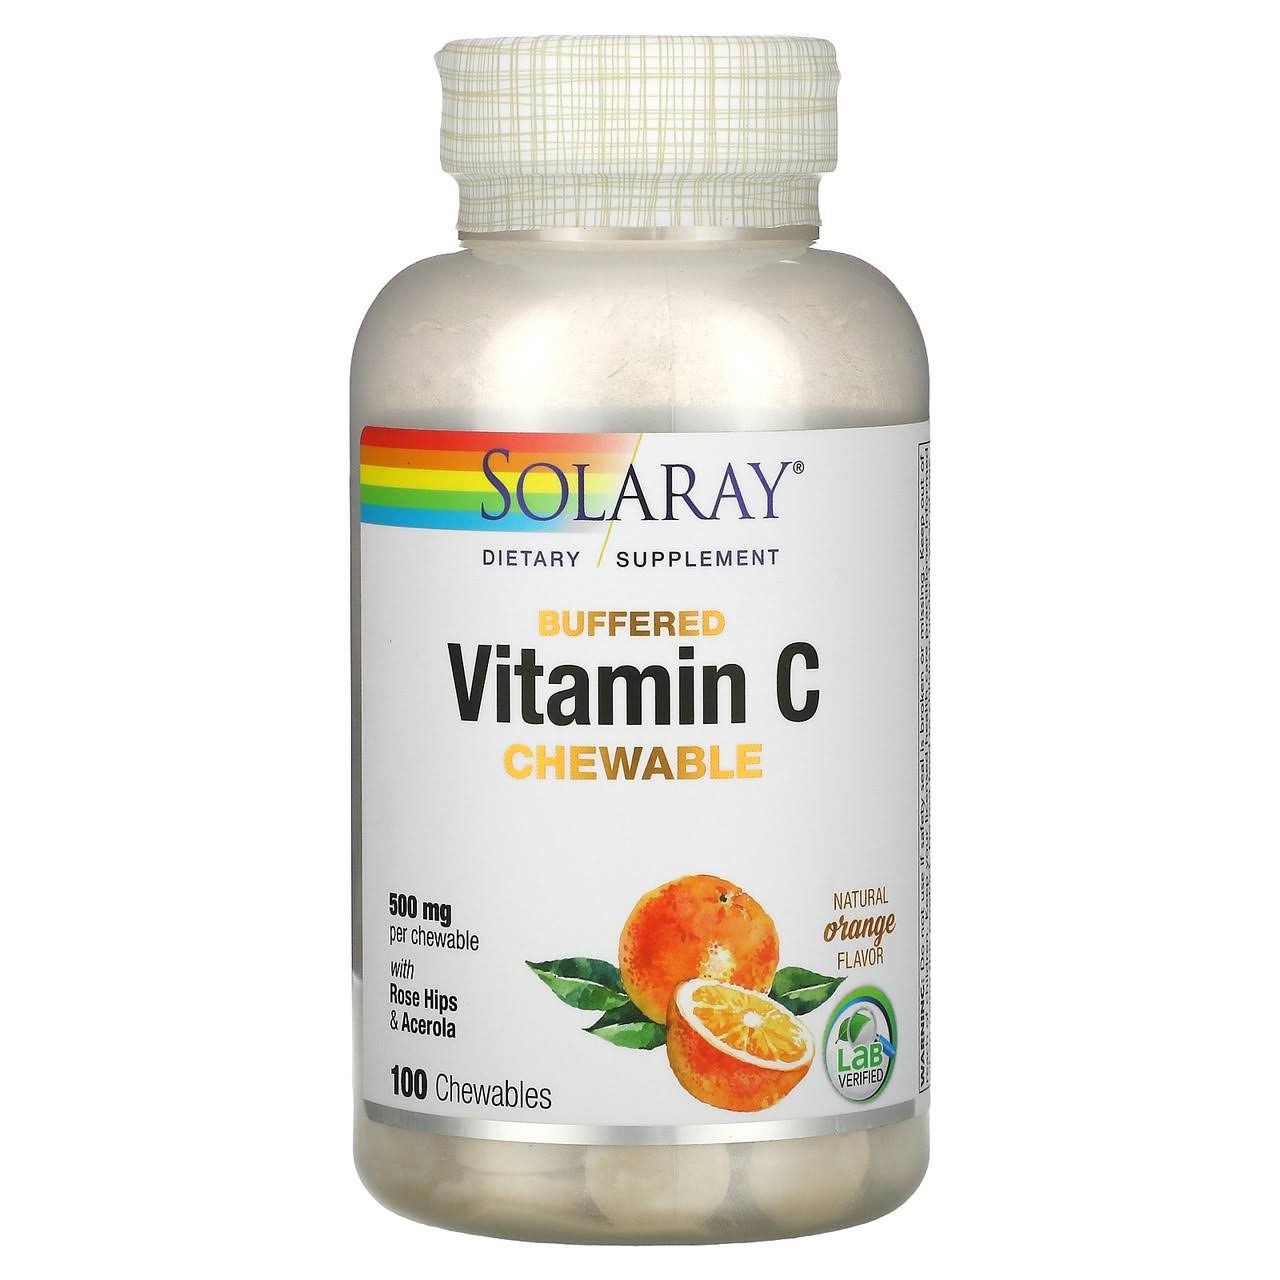 Solaray Vitamin C Chewable 500mg Dietary Supplement - Orange, x100